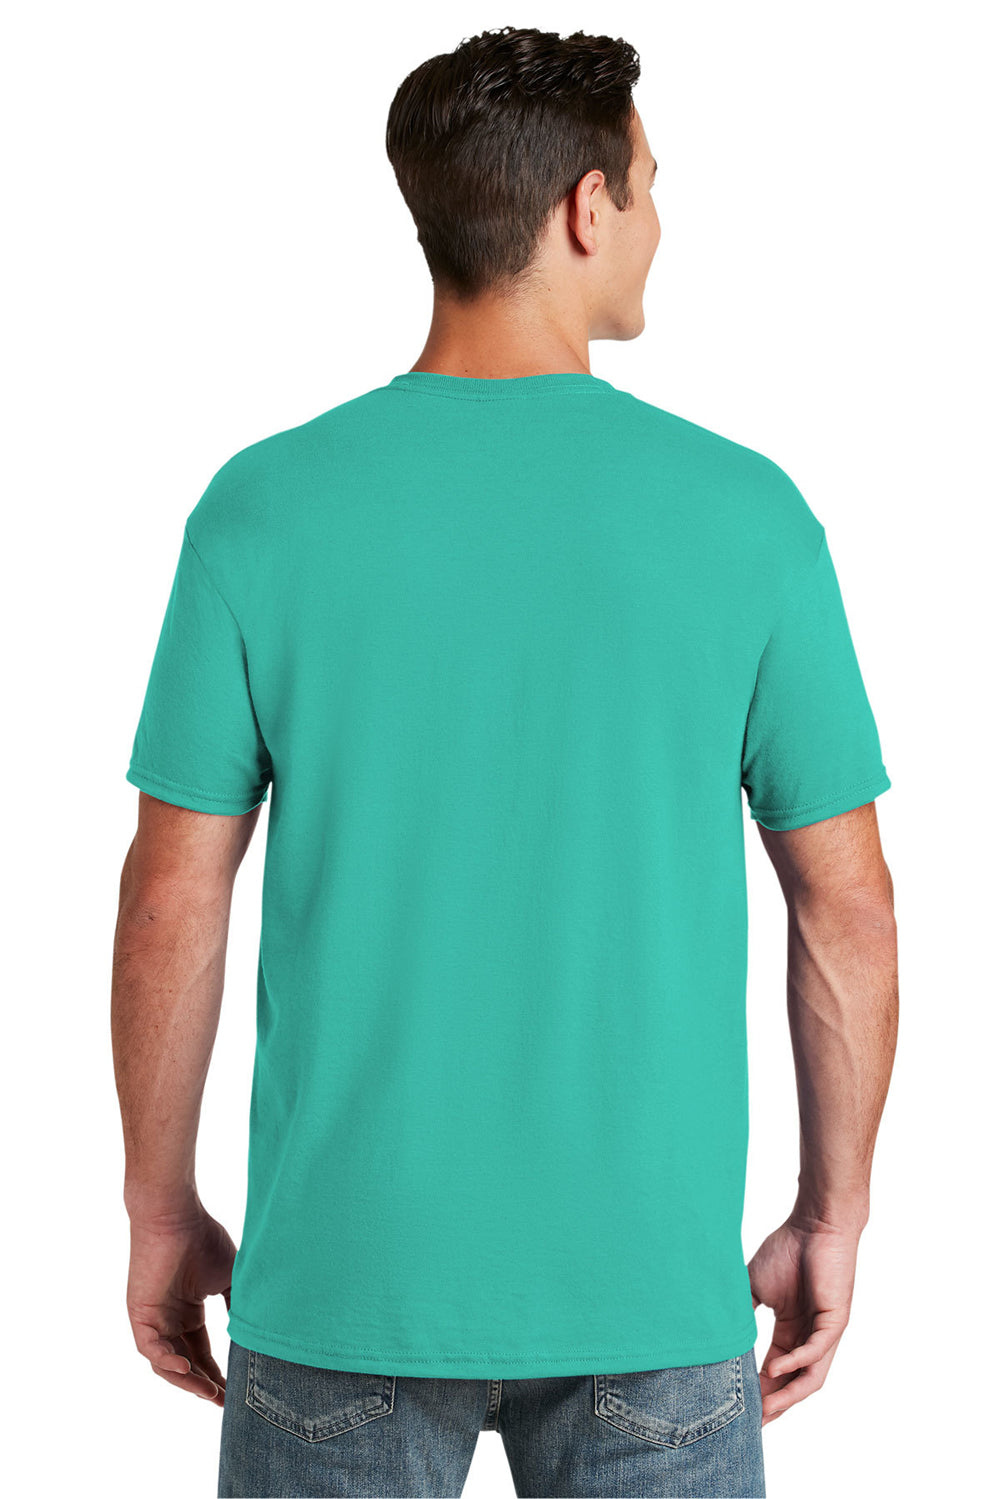 Jerzees 29M/29MR/29MT Mens Dri-Power Moisture Wicking Short Sleeve Crewneck T-Shirt Cool Mint Green Back